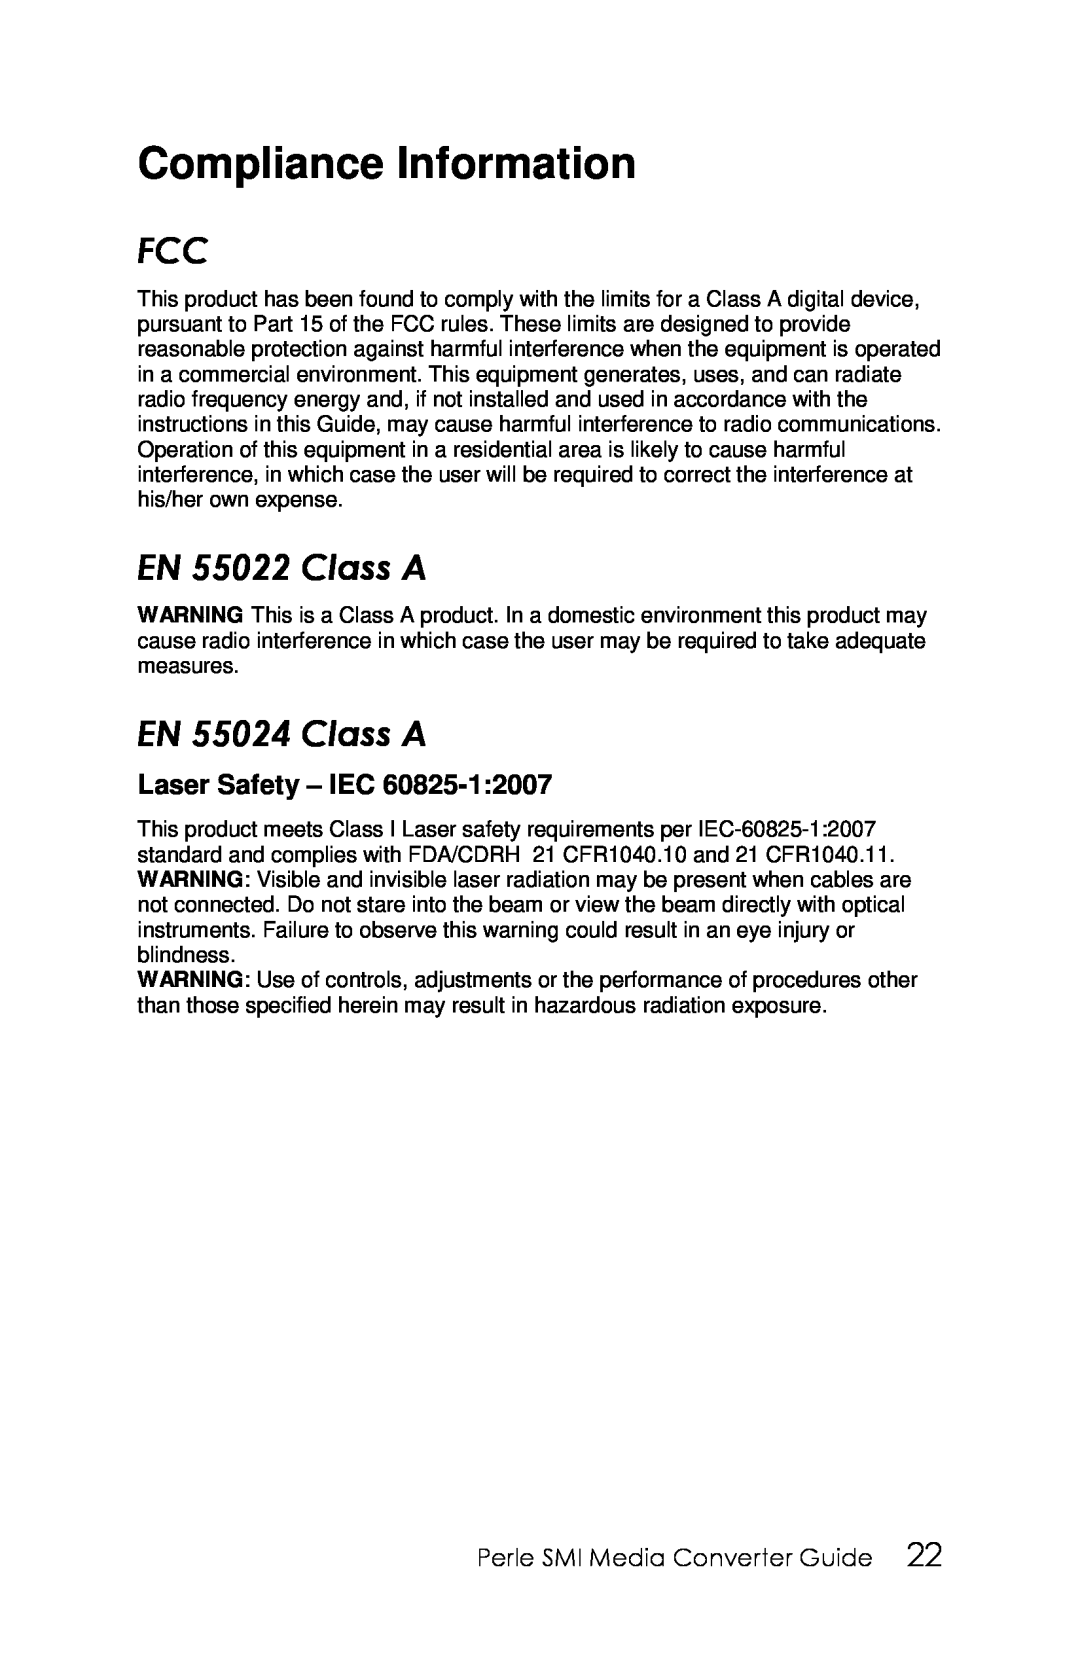 Perle Systems 5500316-13 manual Compliance Information, EN 55022 CLASS A, EN 55024 CLASS A, Laser Safety - IEC 